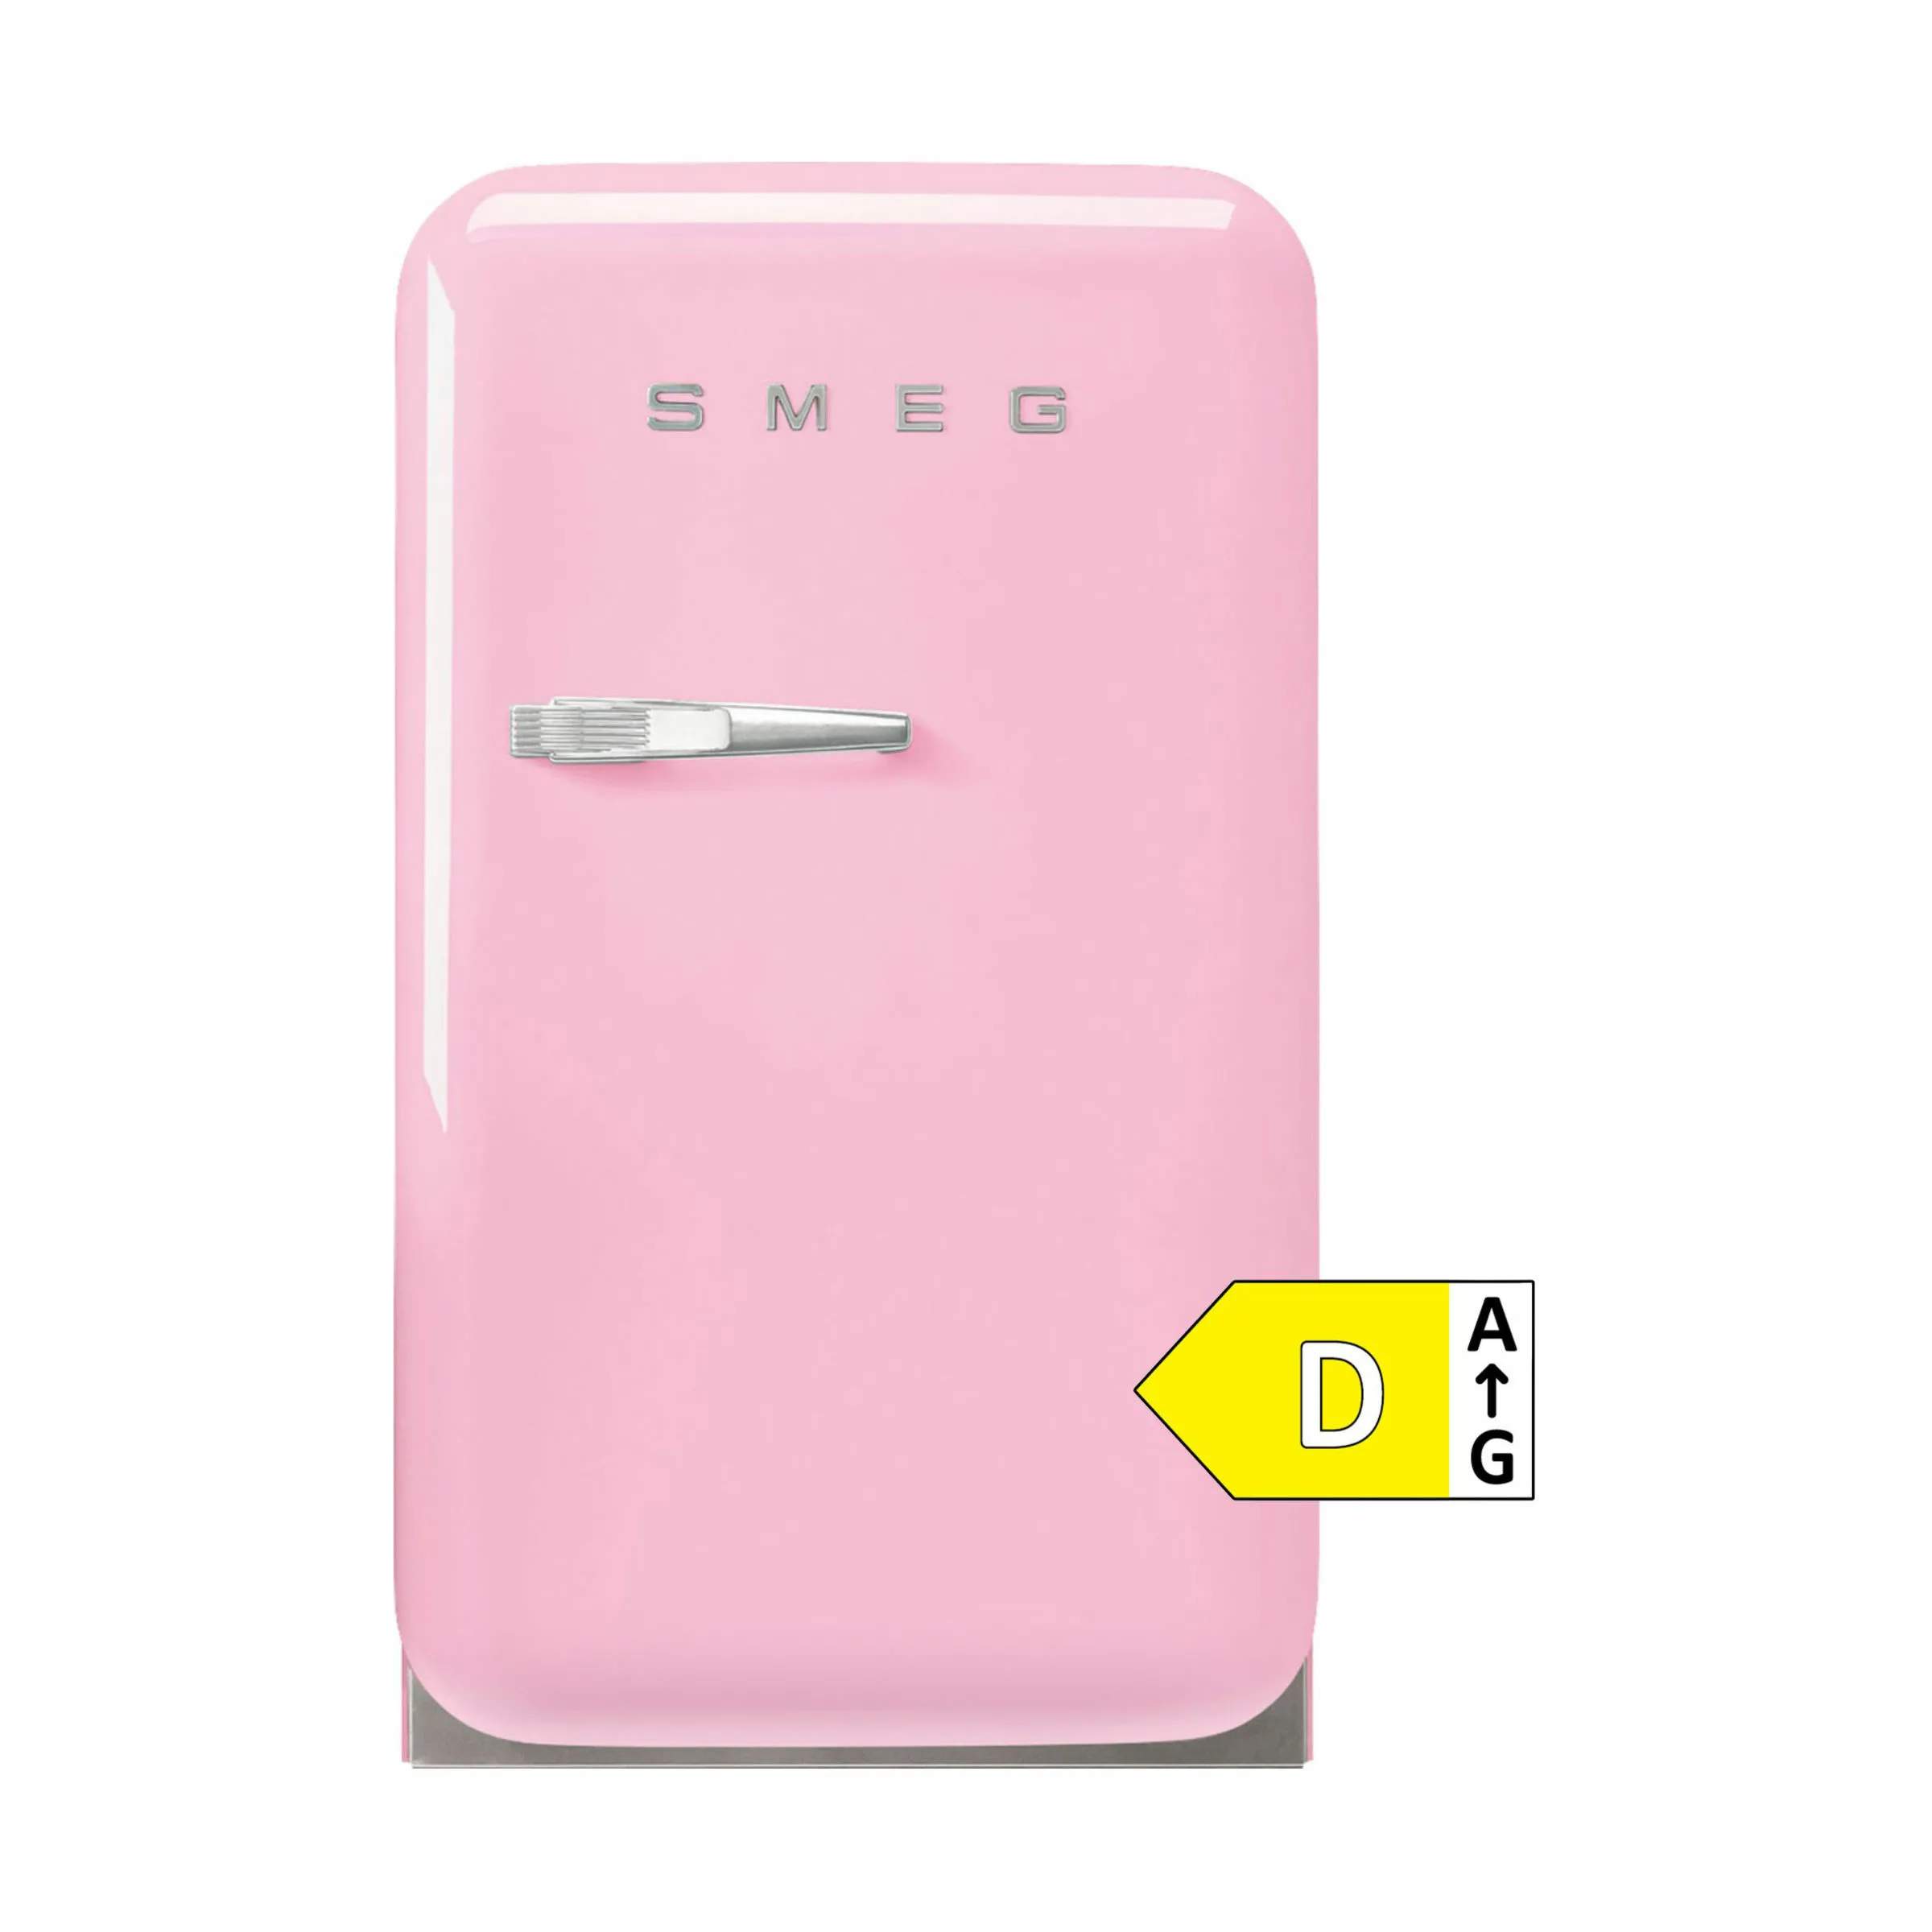 50's Style Minikøleskab, pink, large